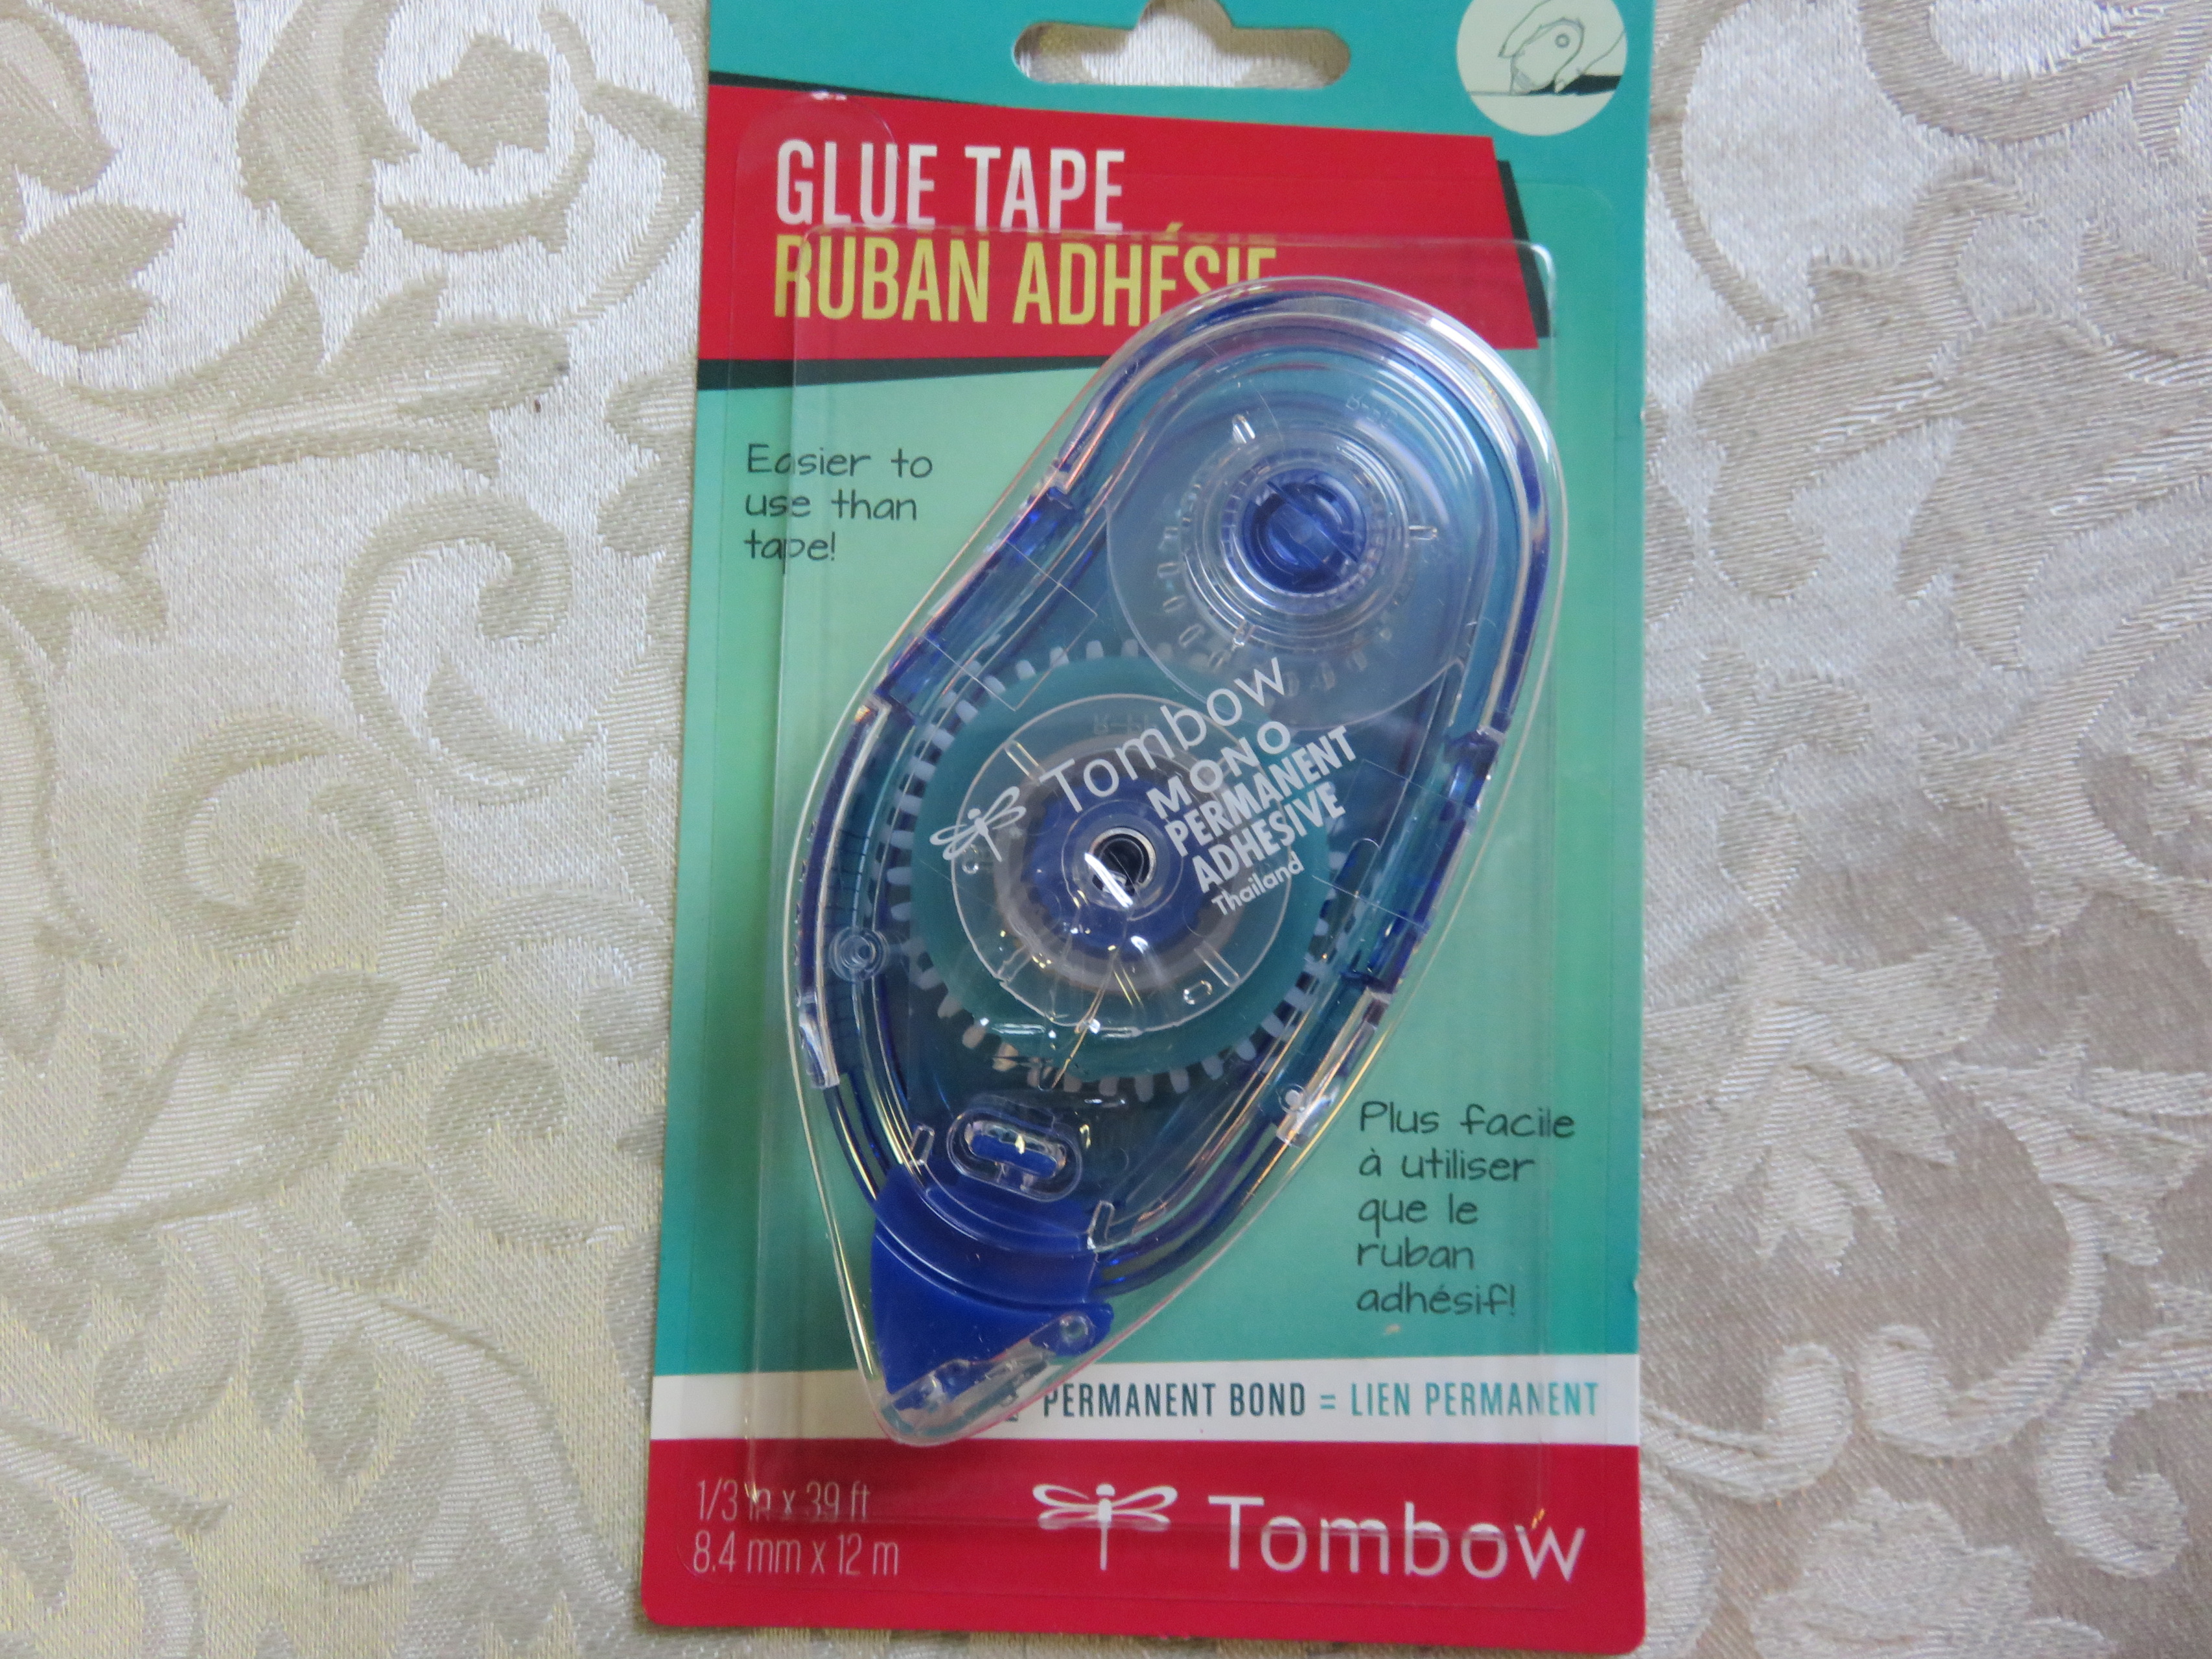 Tombow Adhesive Tape